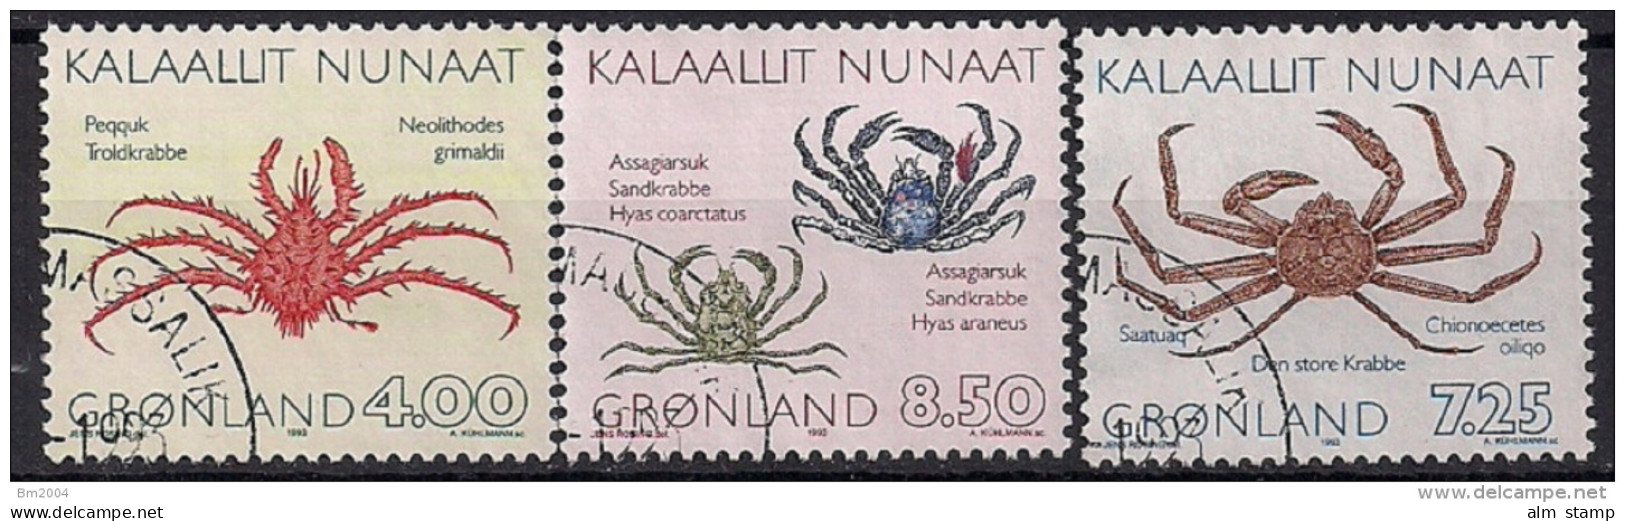 1993 Grönland Mi. 231-3 Used  Krabben. - Used Stamps